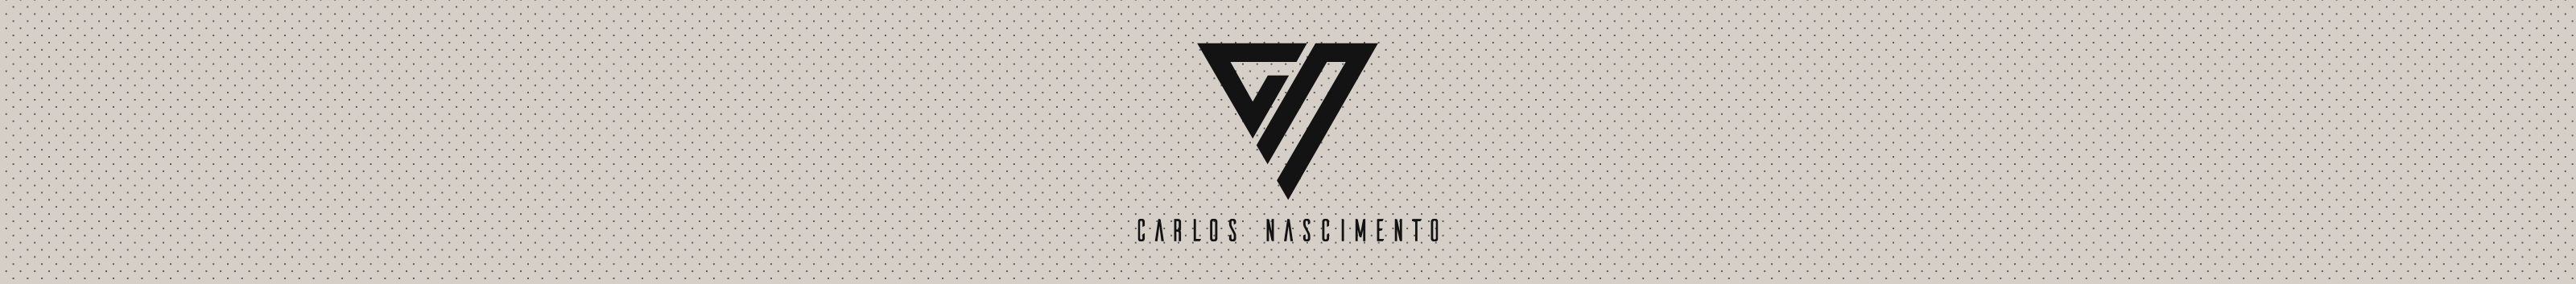 Banner de perfil de Carlos Nascimento